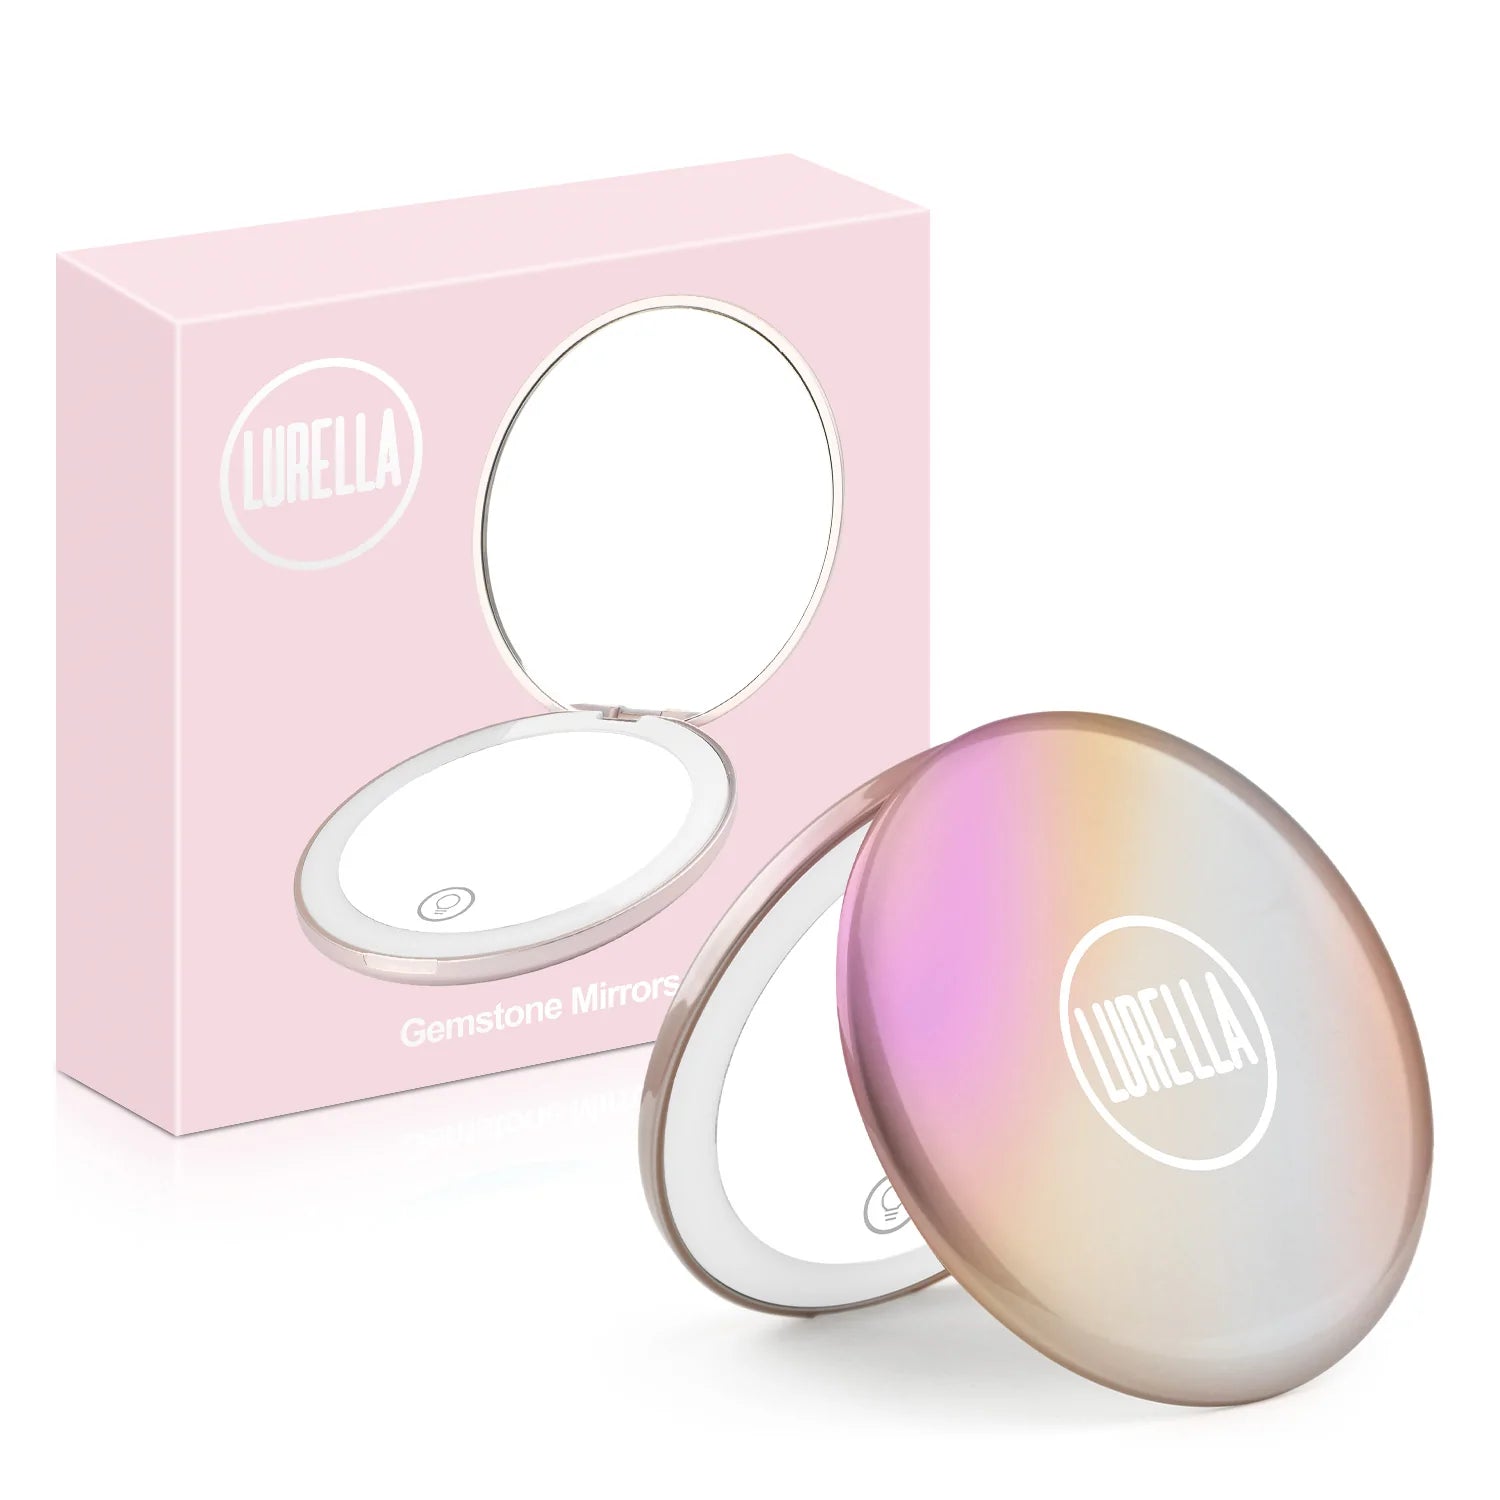 Lurella Cosmetics - Gemstone Mirror Pink